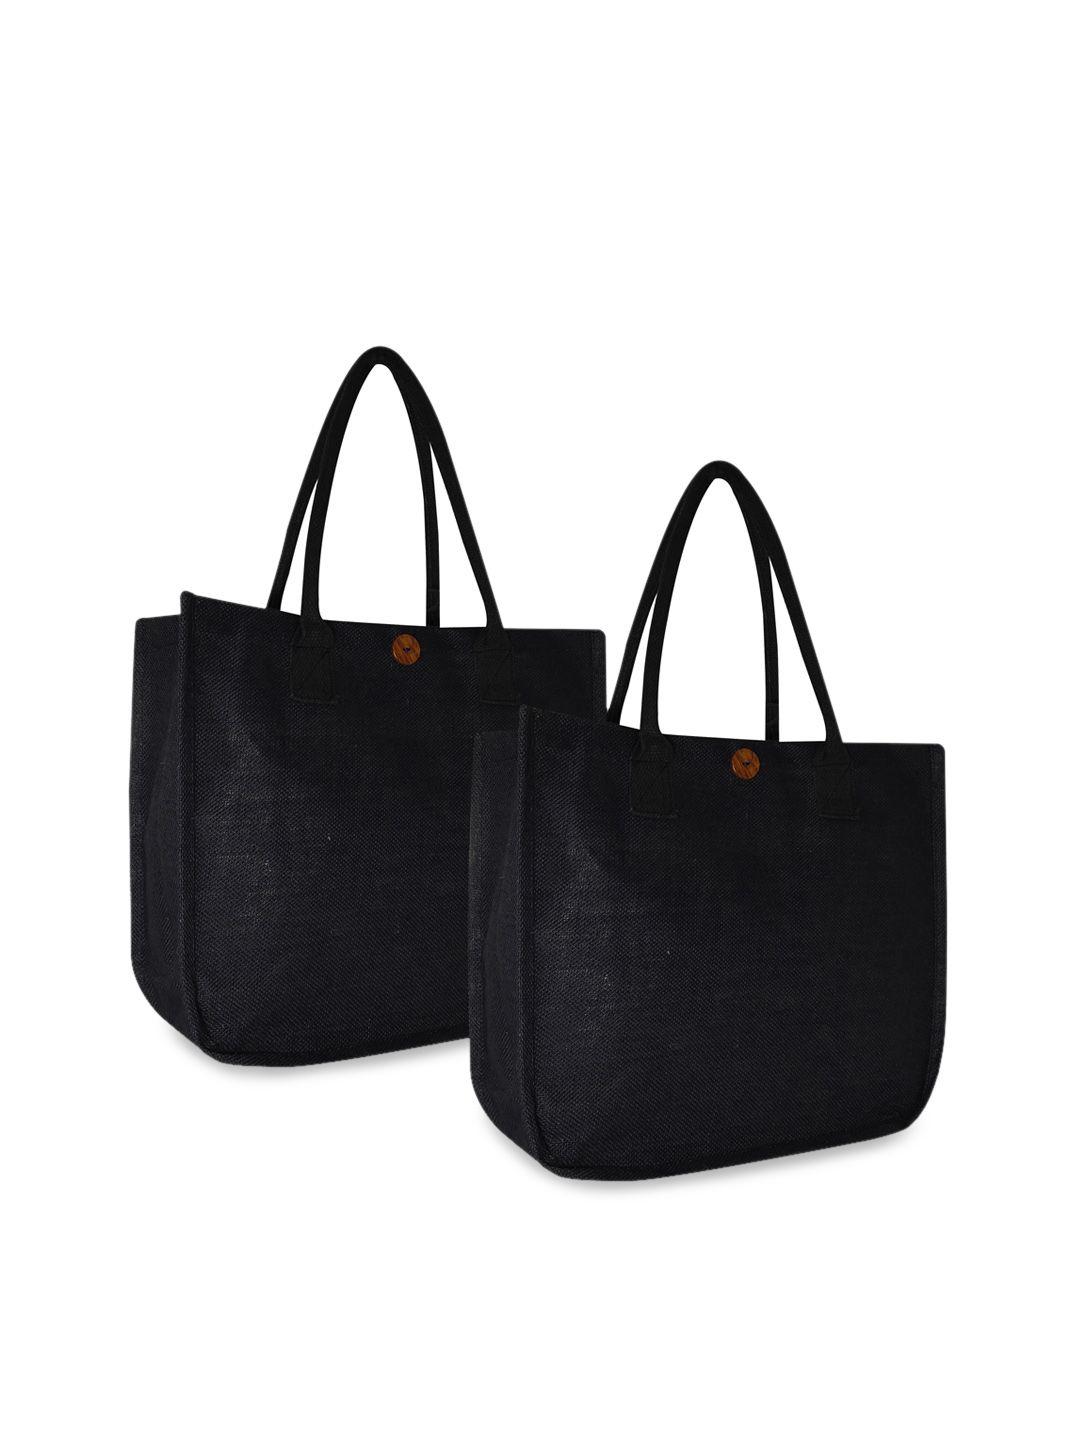 earthbags set of 2 jute shopper tote bags